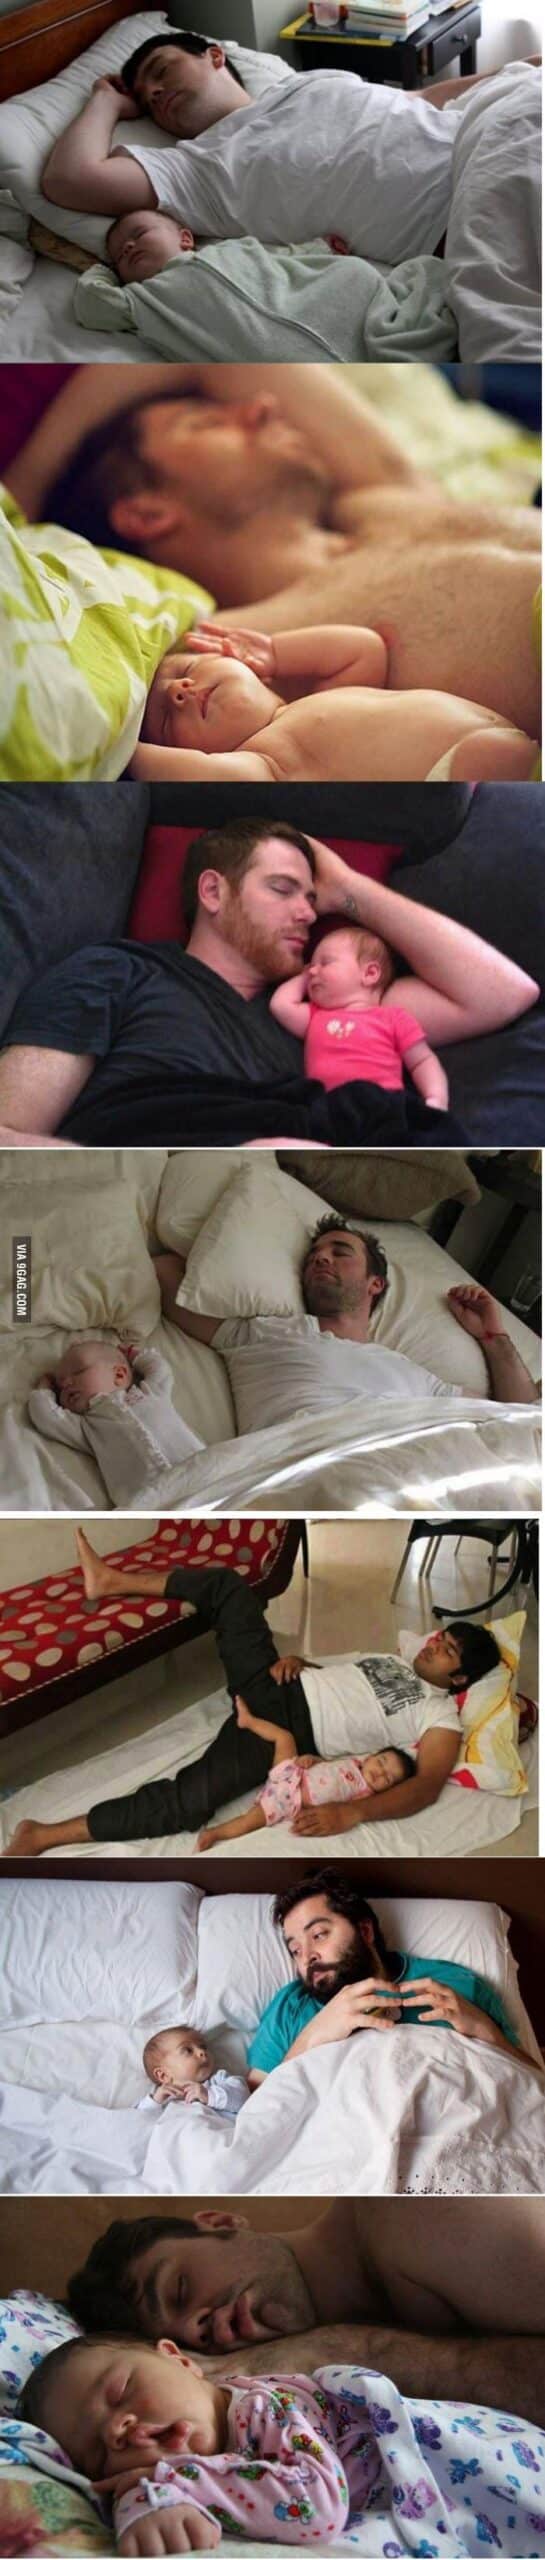 tilestwra.gr : aMr8AnG 700b Μπαμπάδες και μωρά κοιμούνται παρέα! Όταν τα τεστ DNA είναι…περιττά!